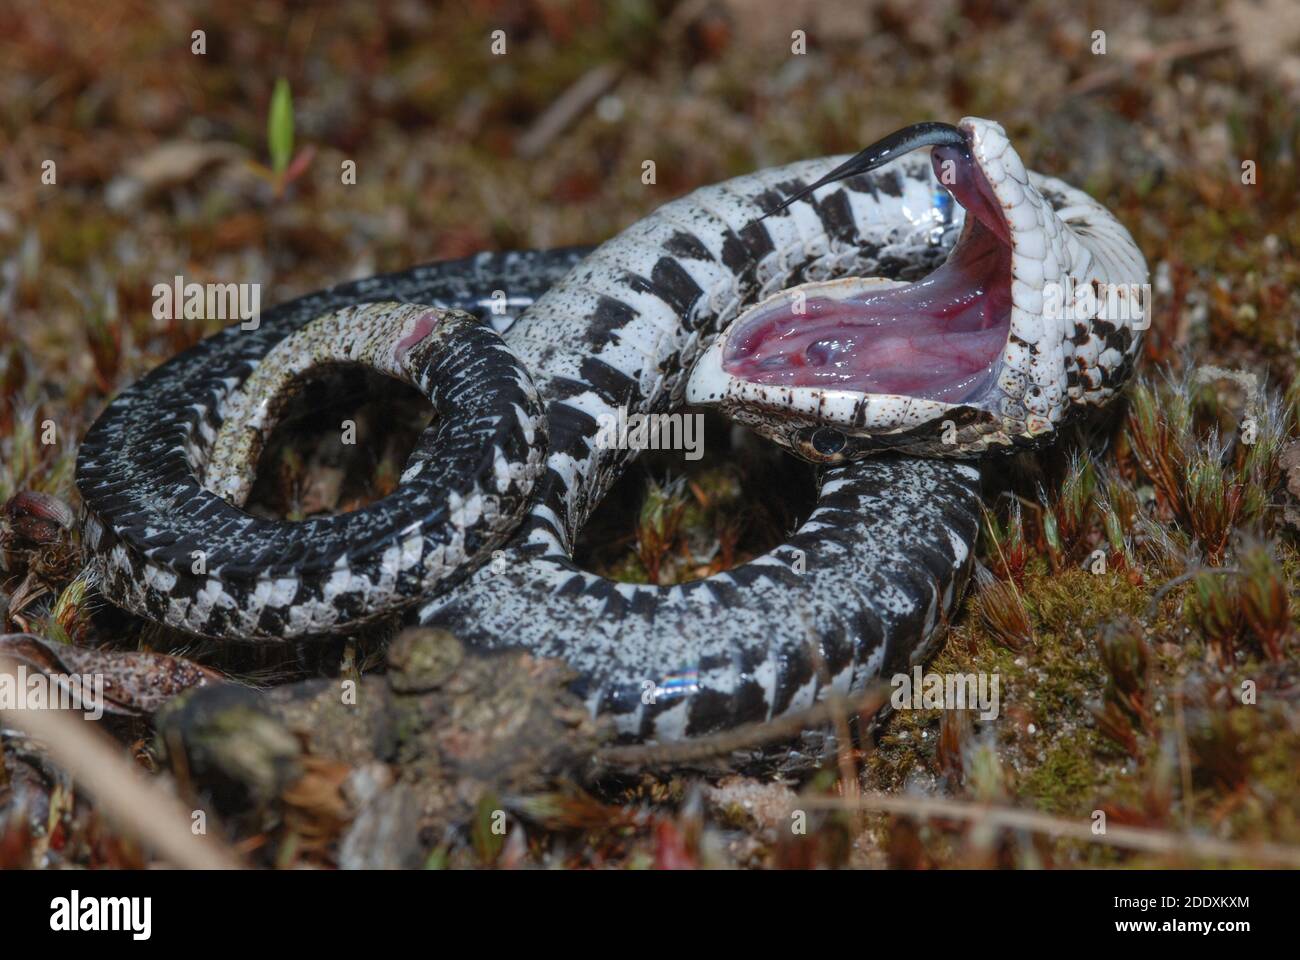 Hognose snake playing dead GLOSSY PHOTO PRINT 3100